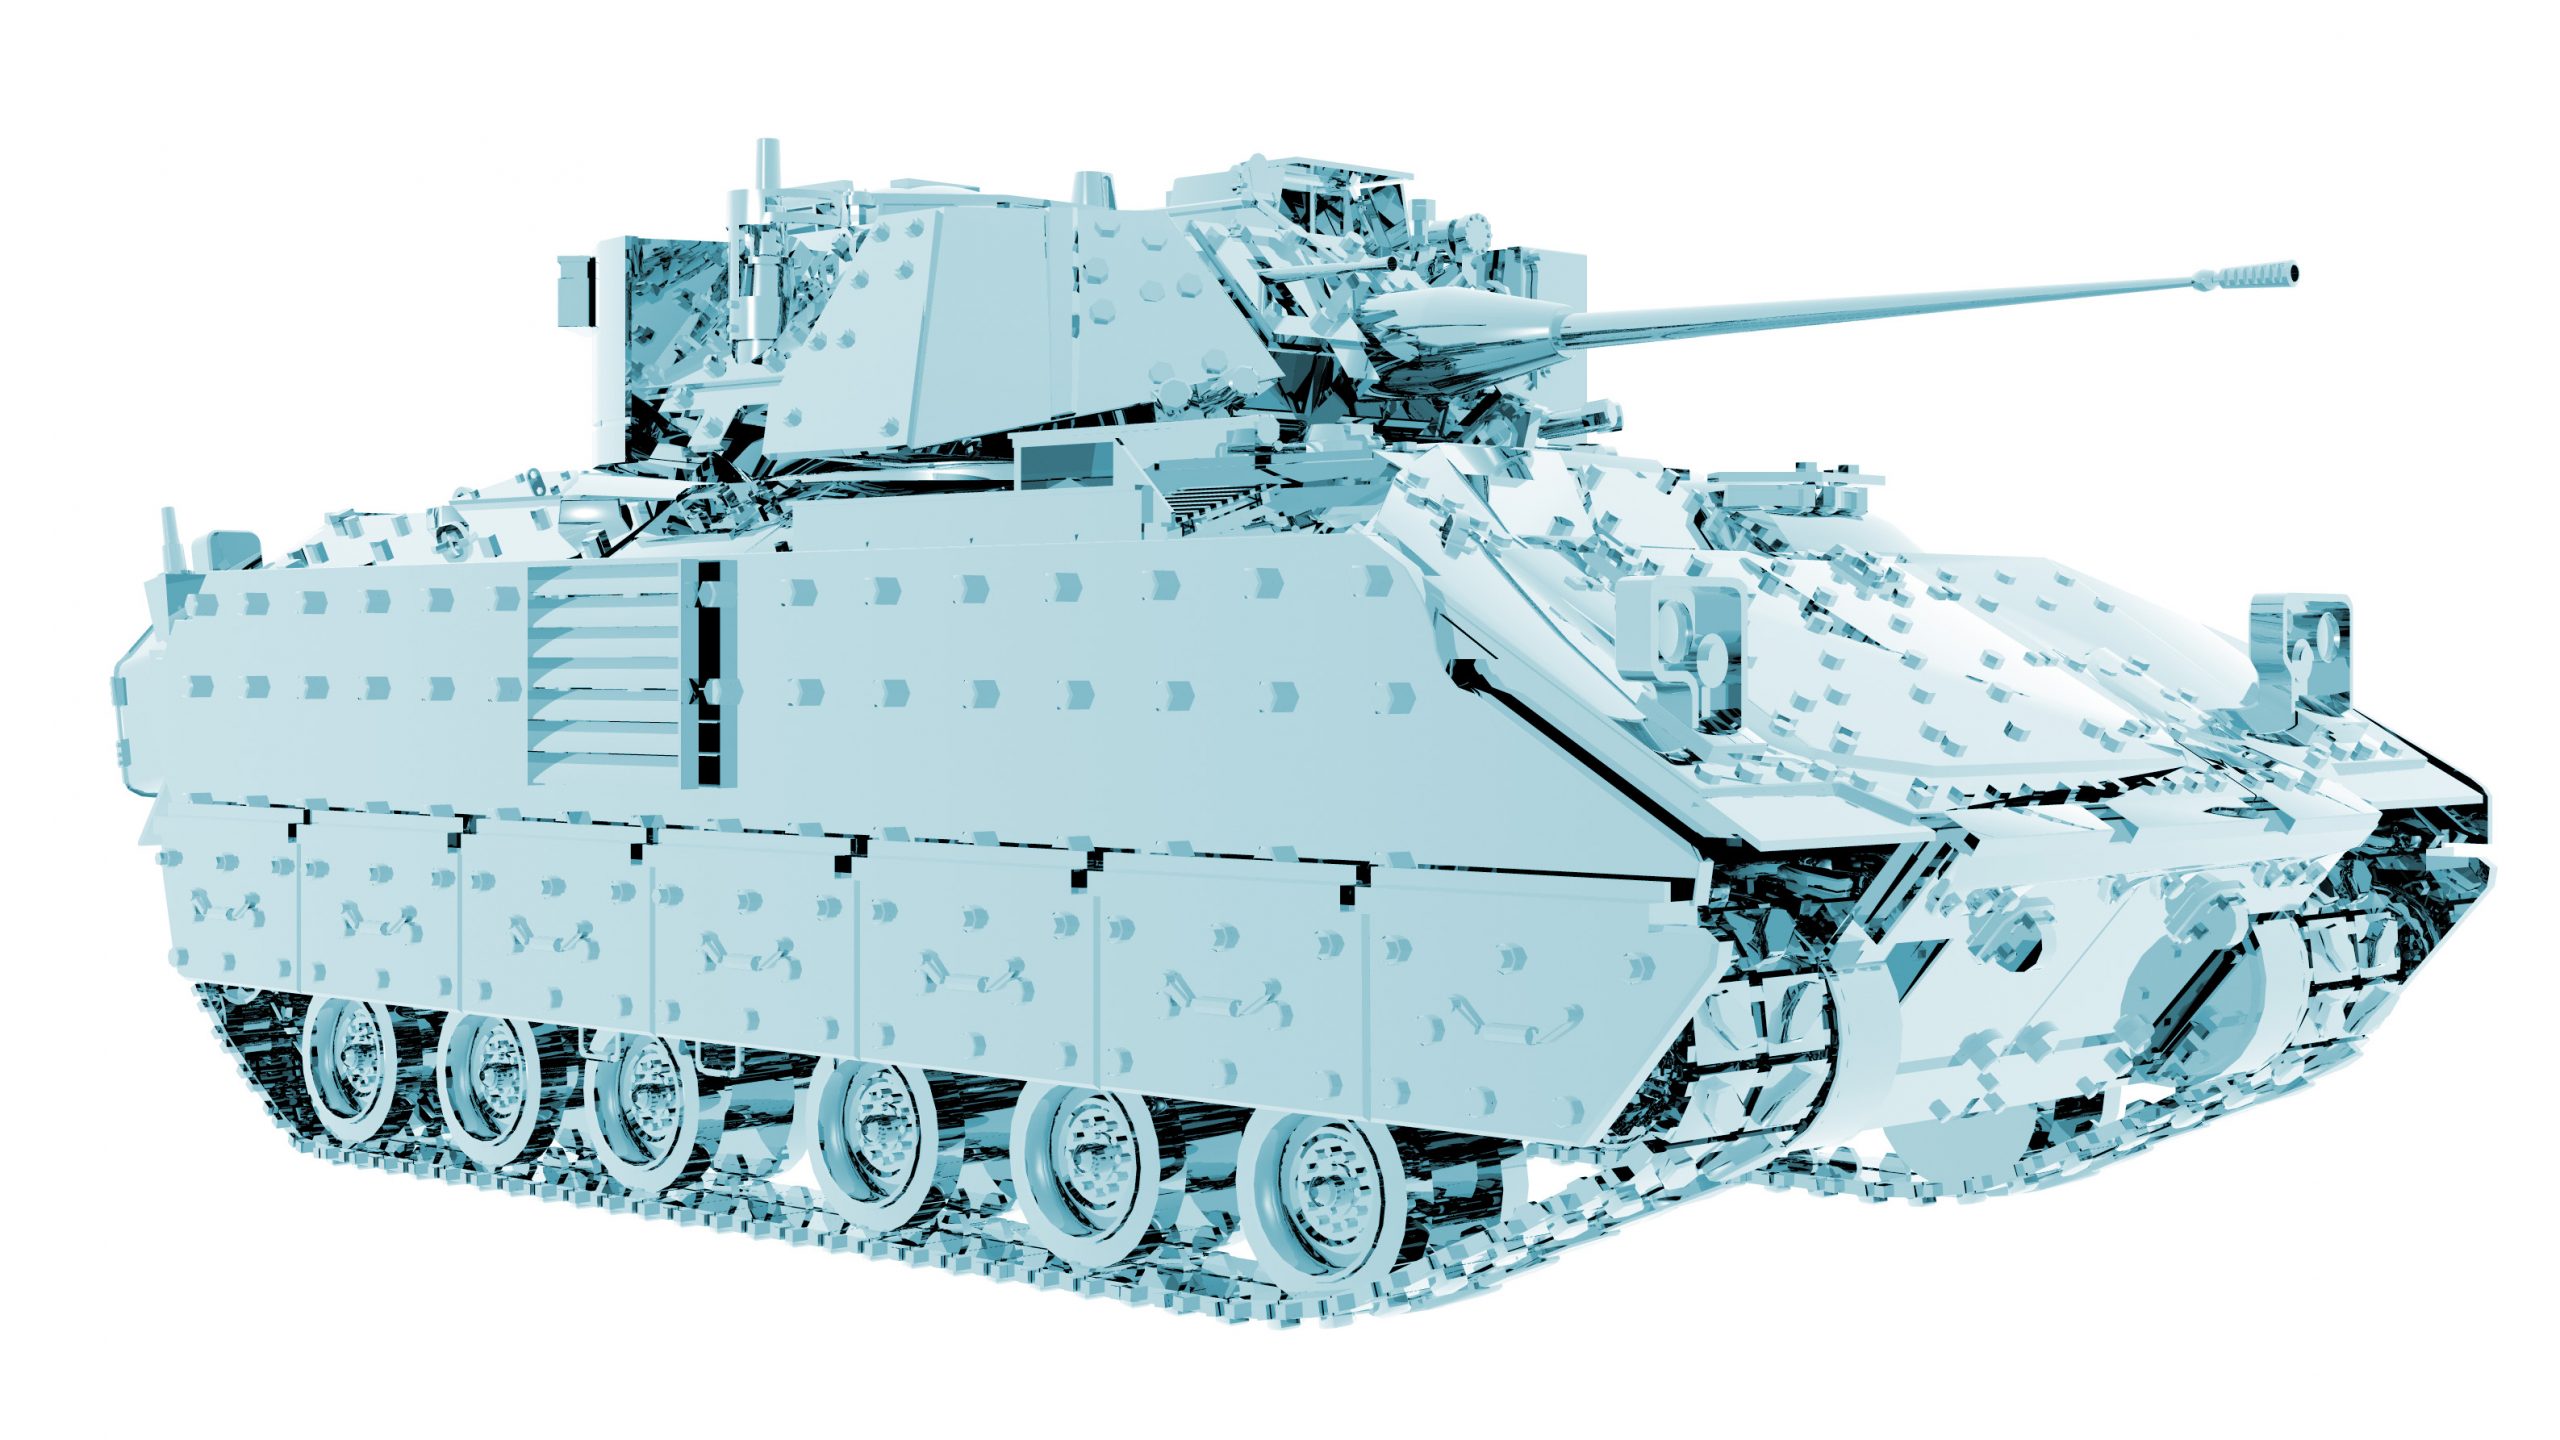 3D illustration of a bradley fighting vehicle tank